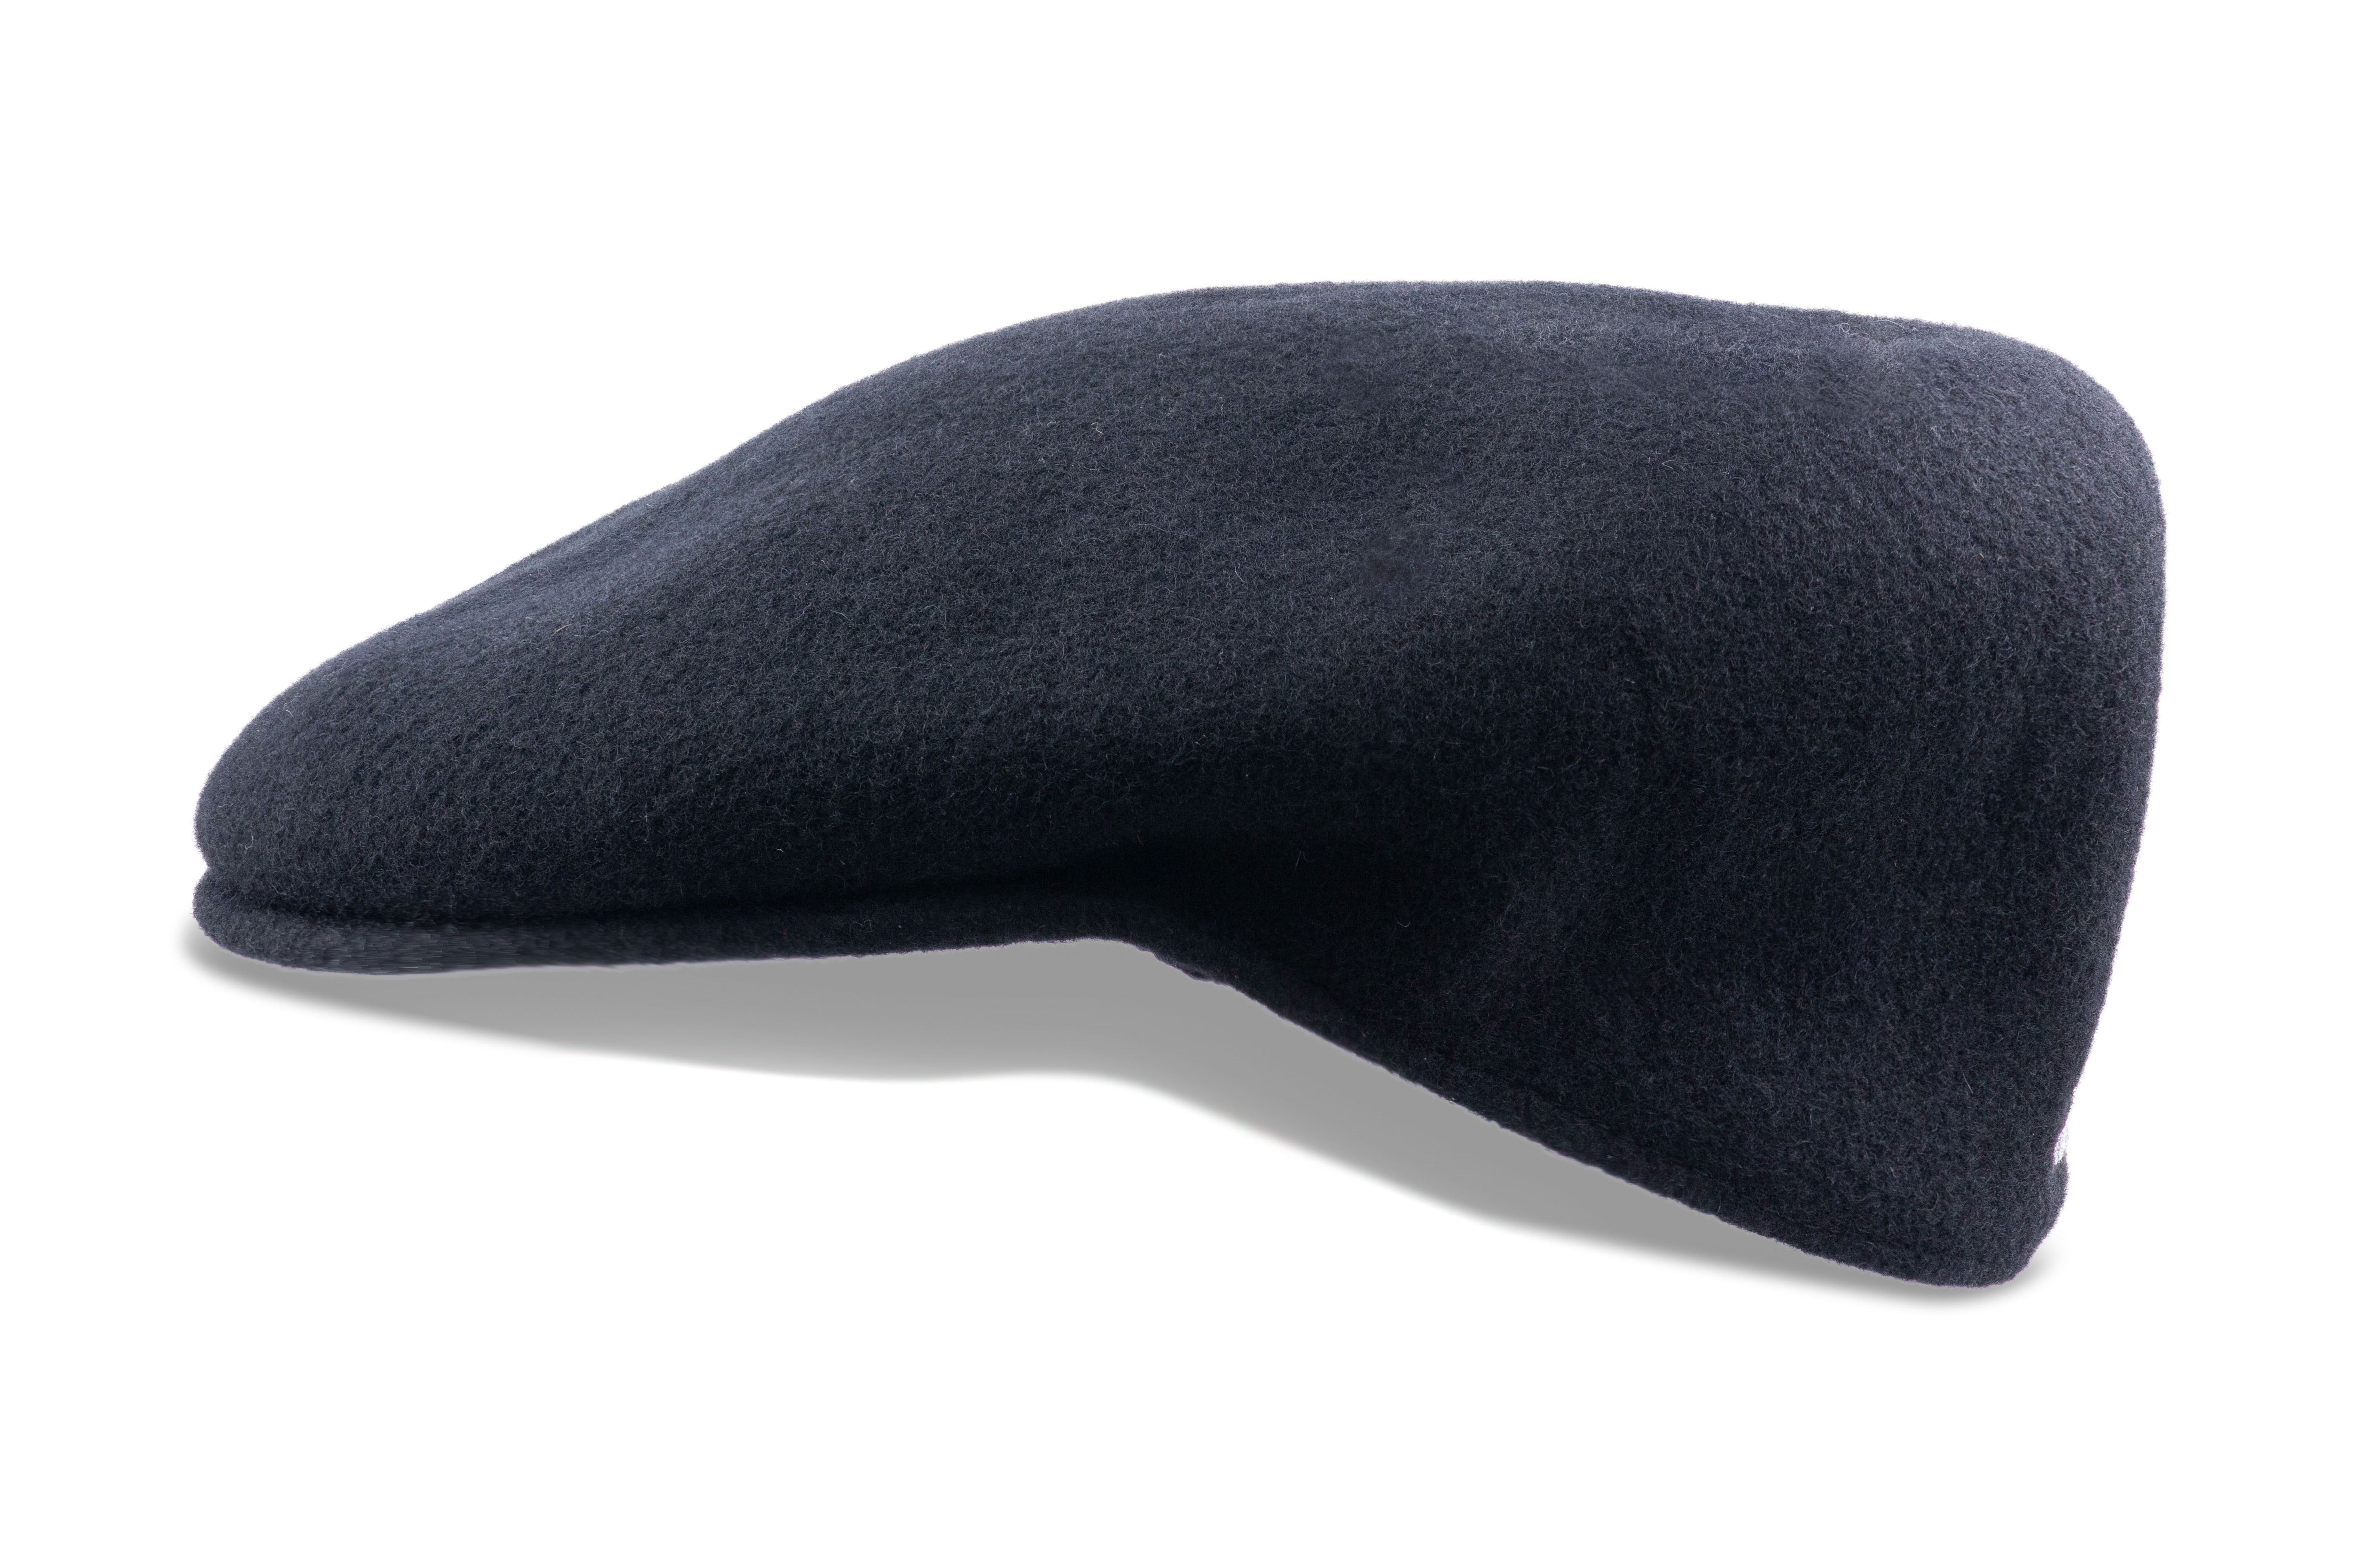 Kangol 504 Wool Felt Hat for Men and Women - Black - XL